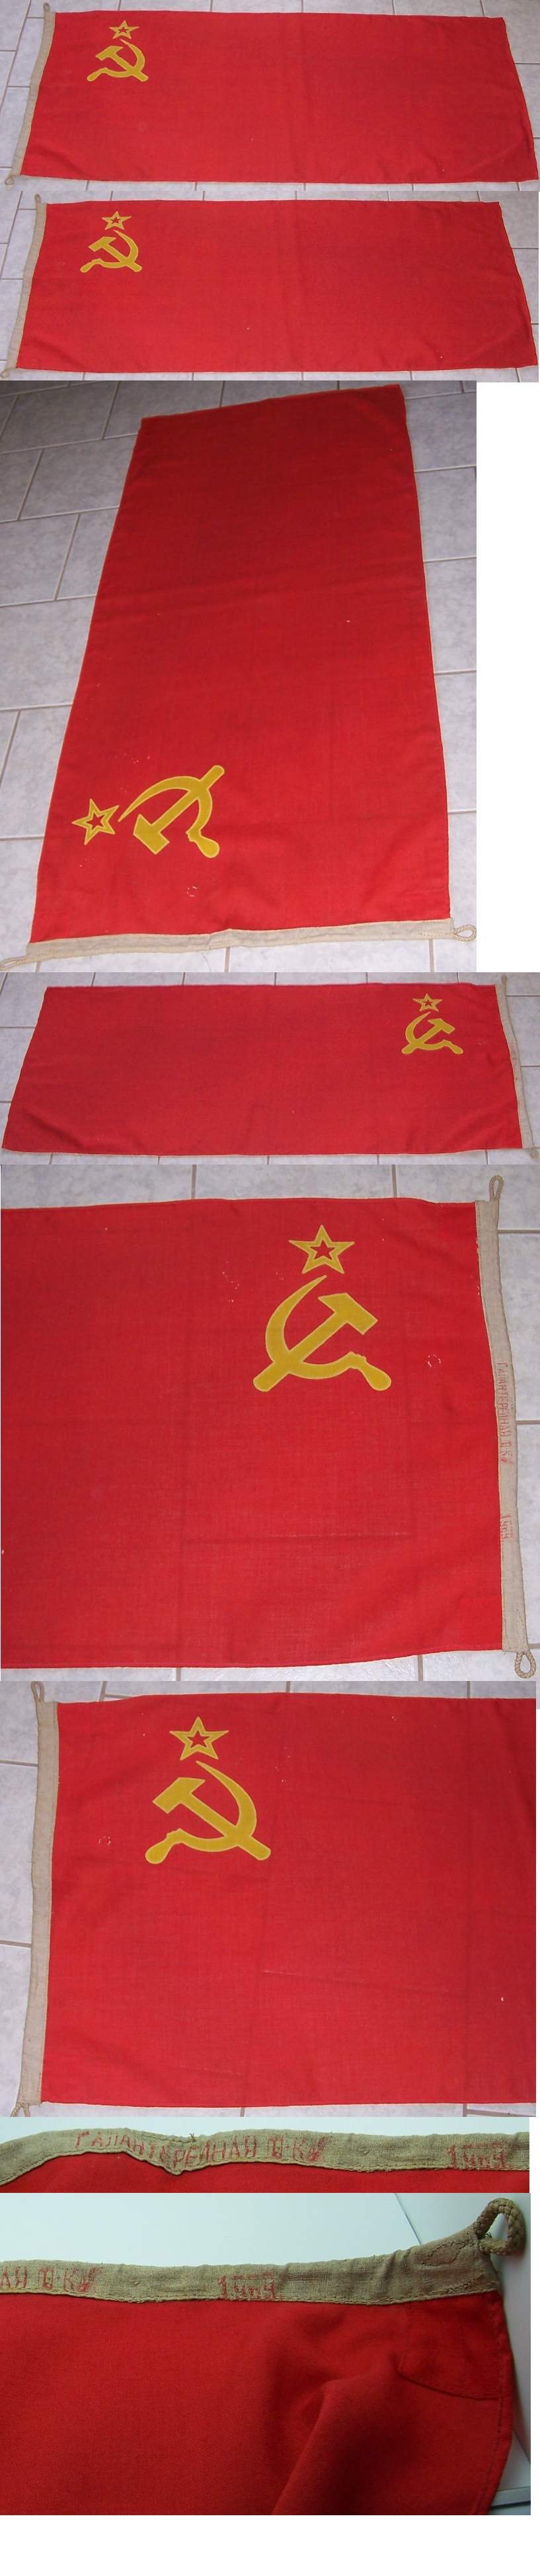 Post-war Russian flag